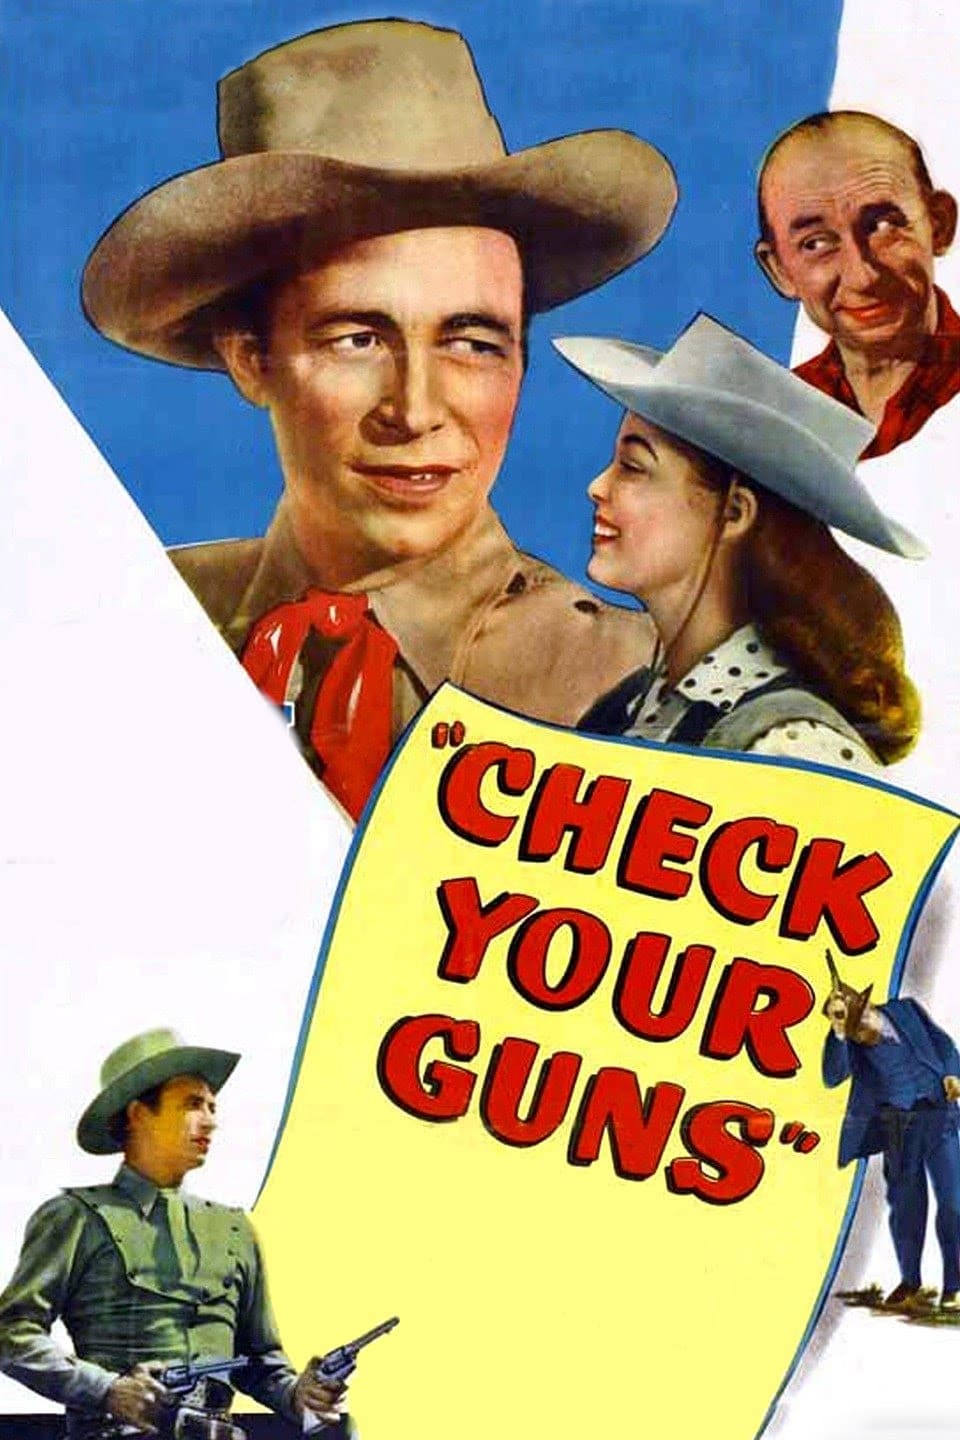 Check Your Guns